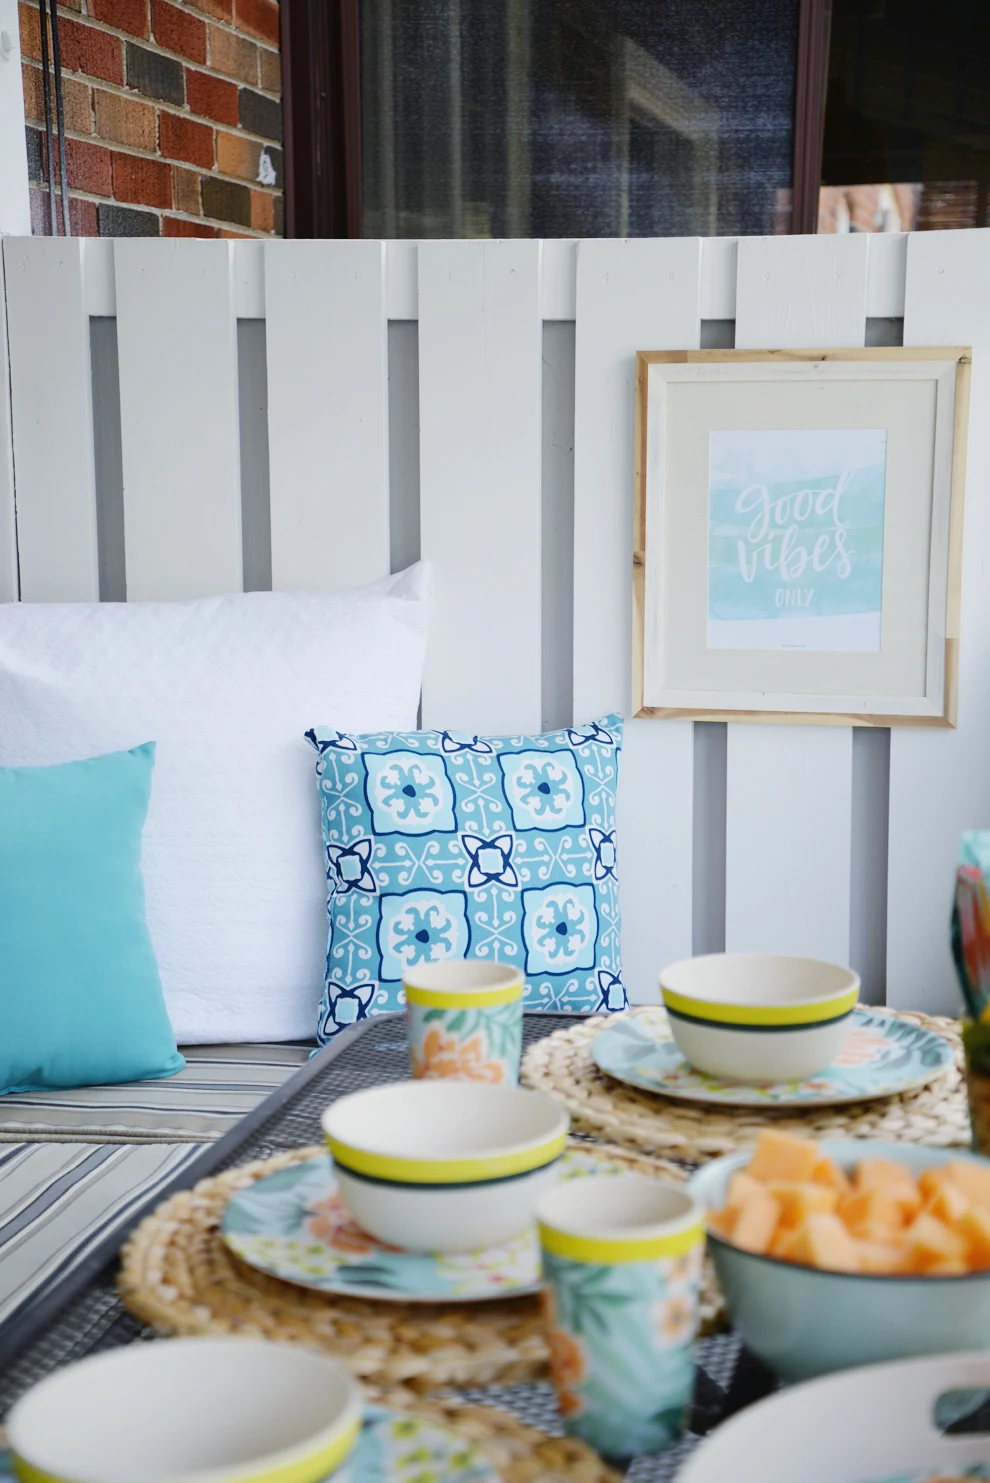 Rambling Renovators | tropical decor, outdoor pillows, blue white rattan decor, good vibes only print